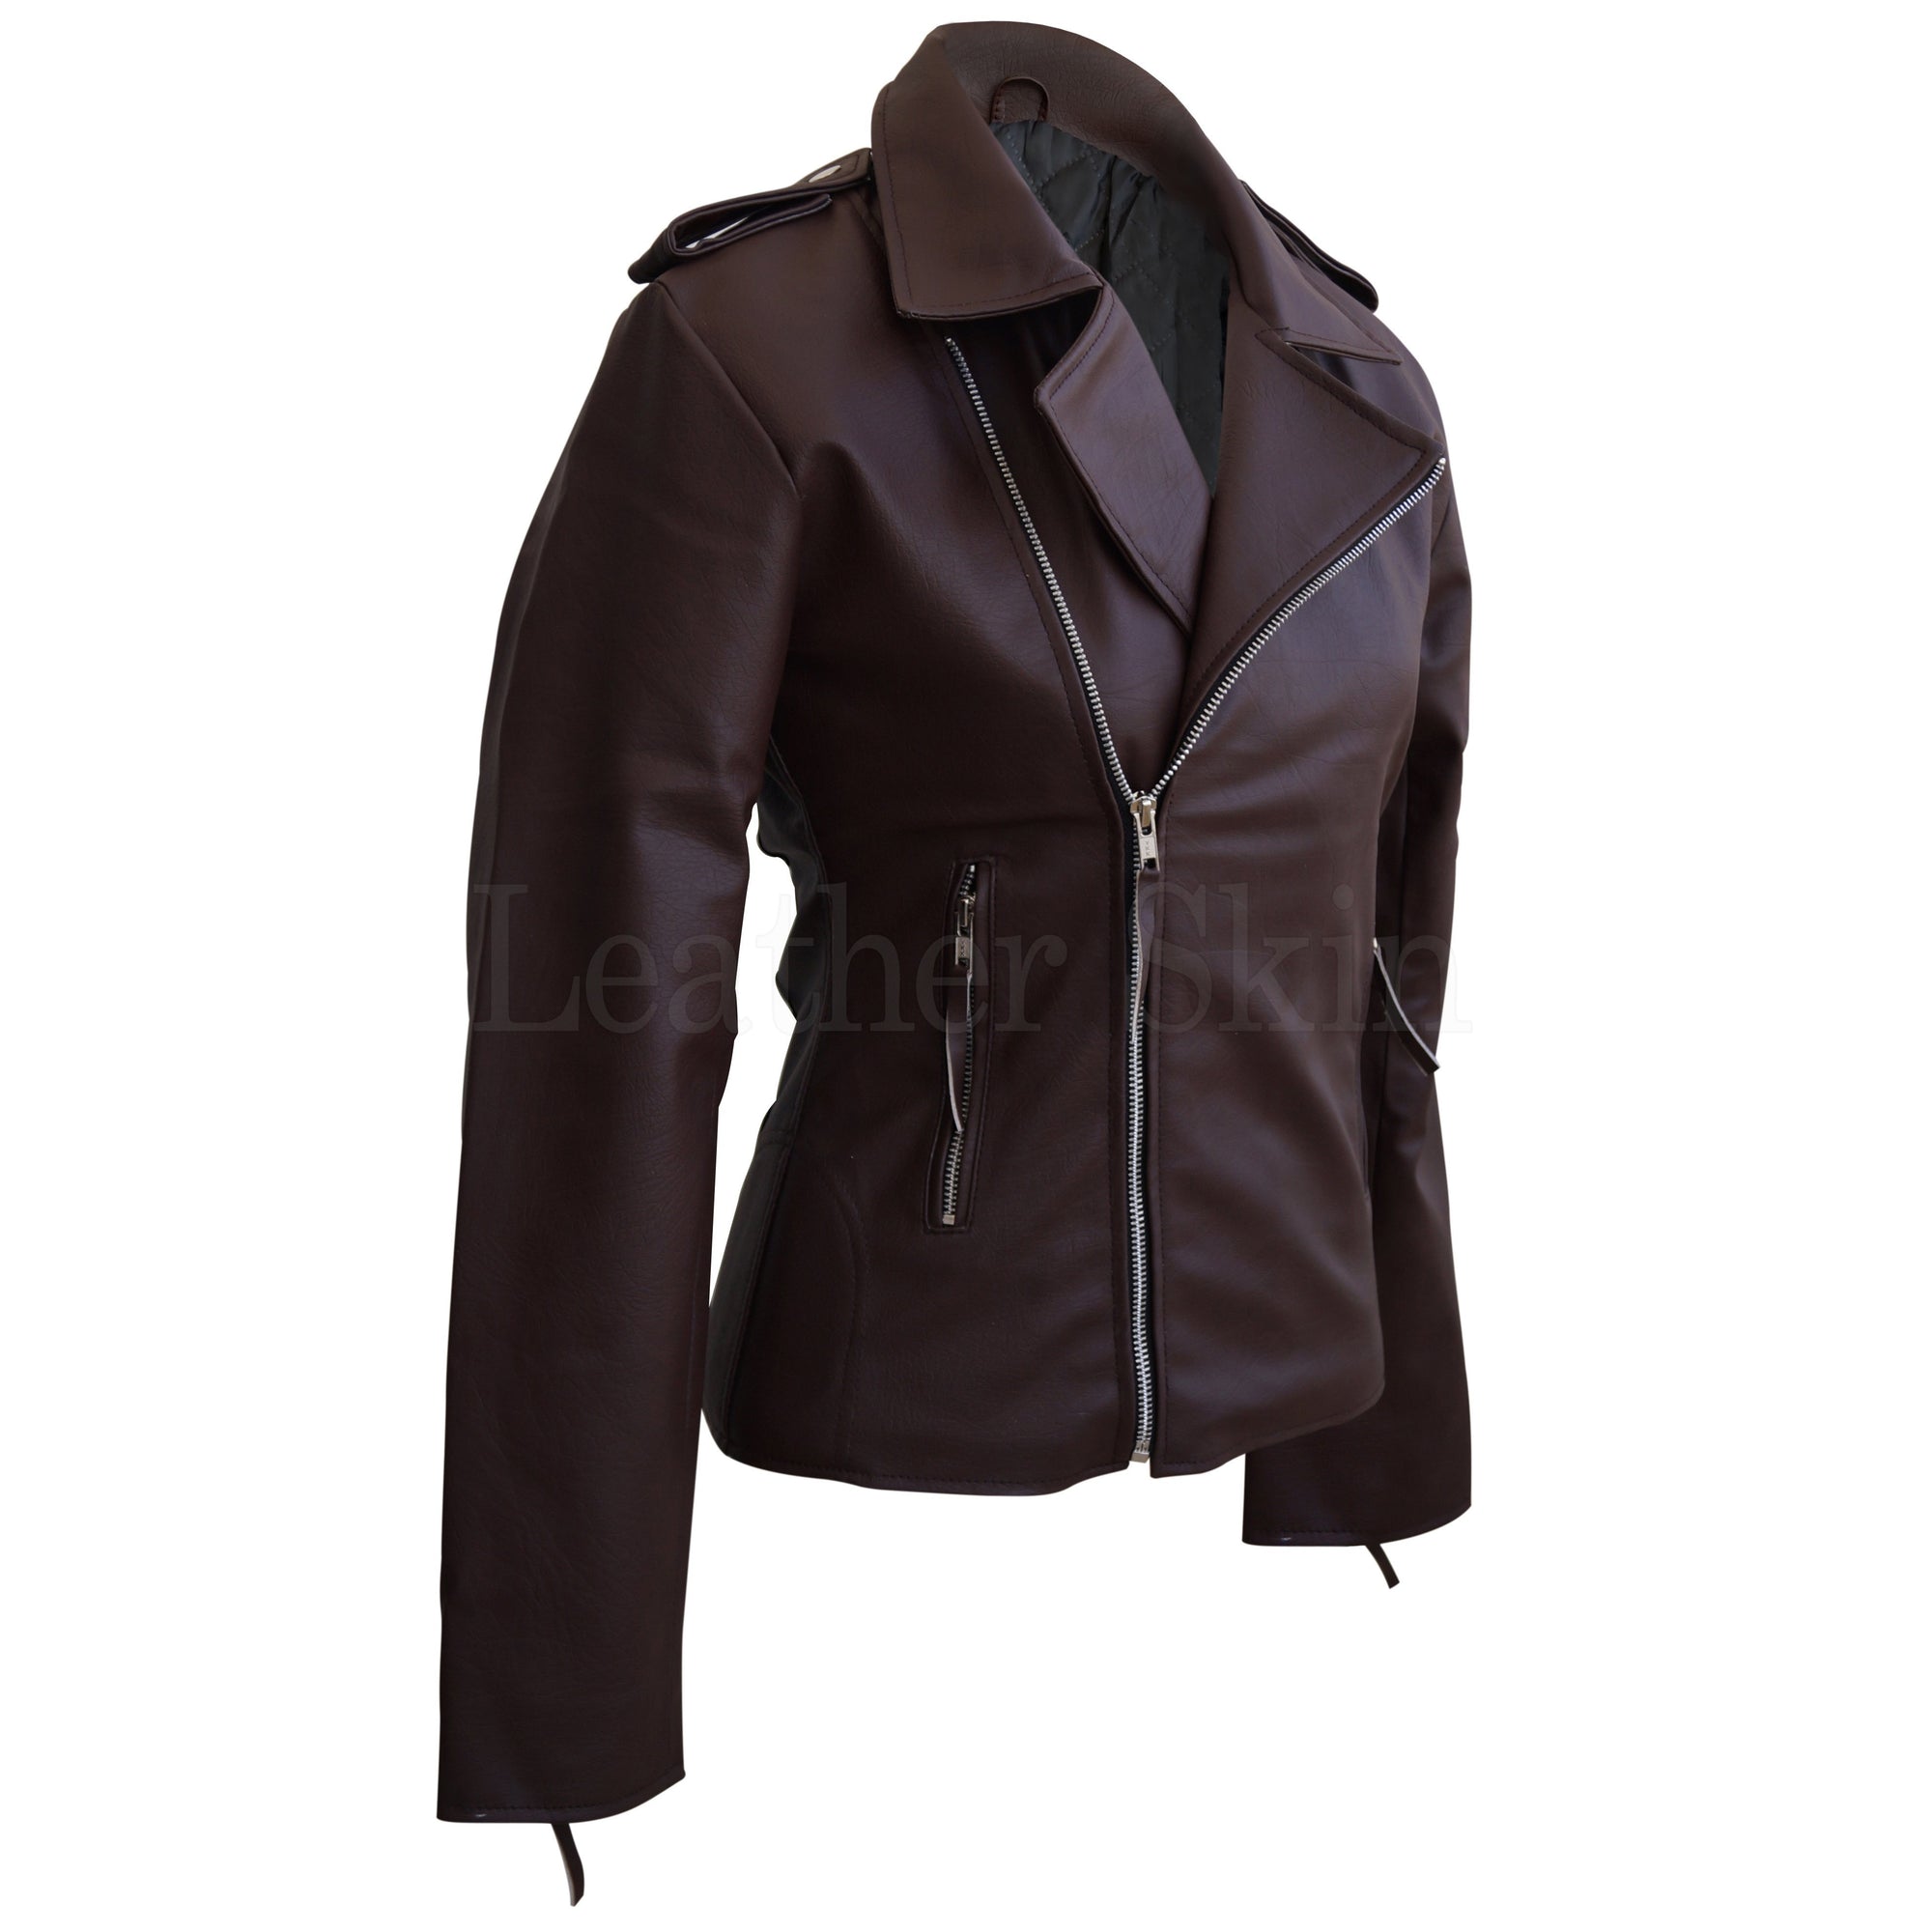 NWT Brown Brando Women Ladies Sexy Stylish Premium Synthetic Leather Jacket